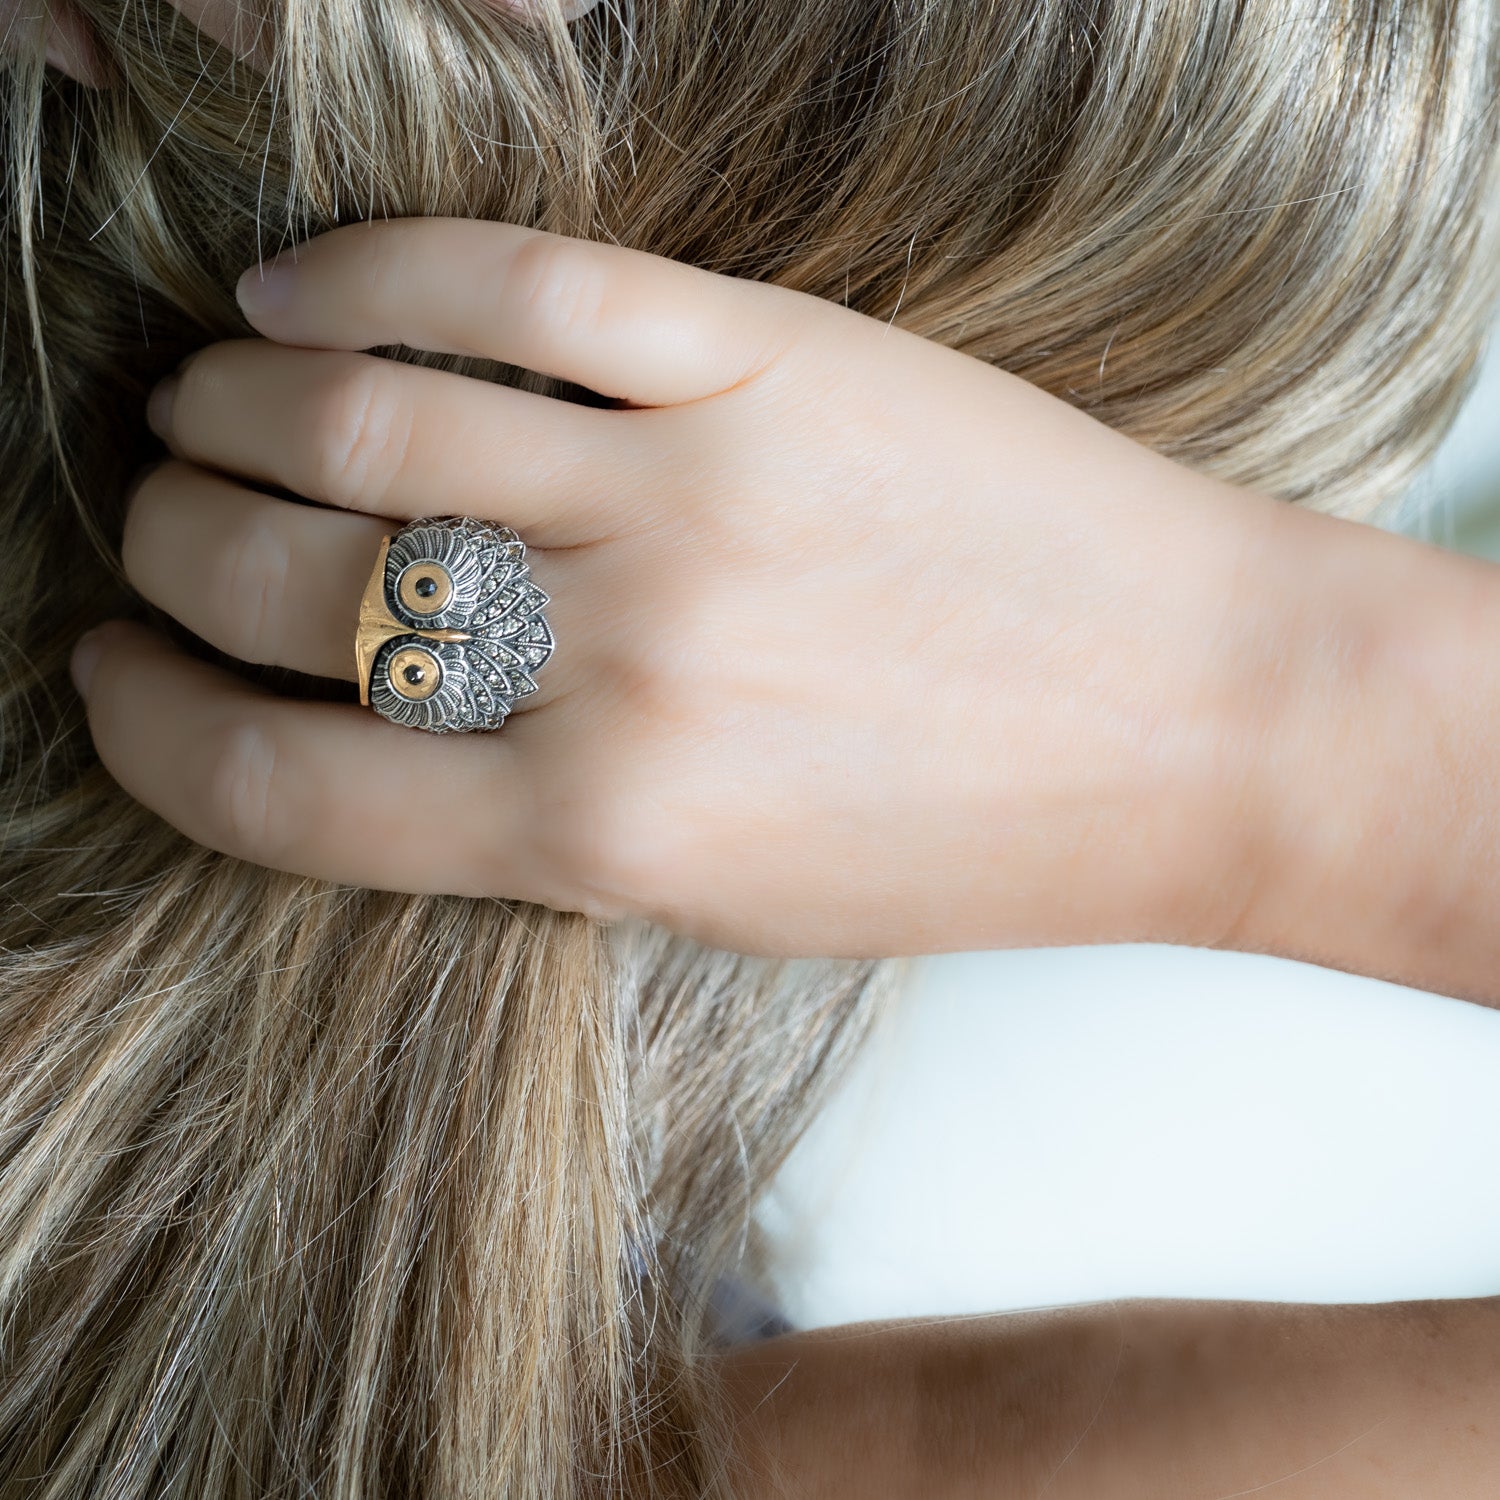 Owl Ring with Diamonds